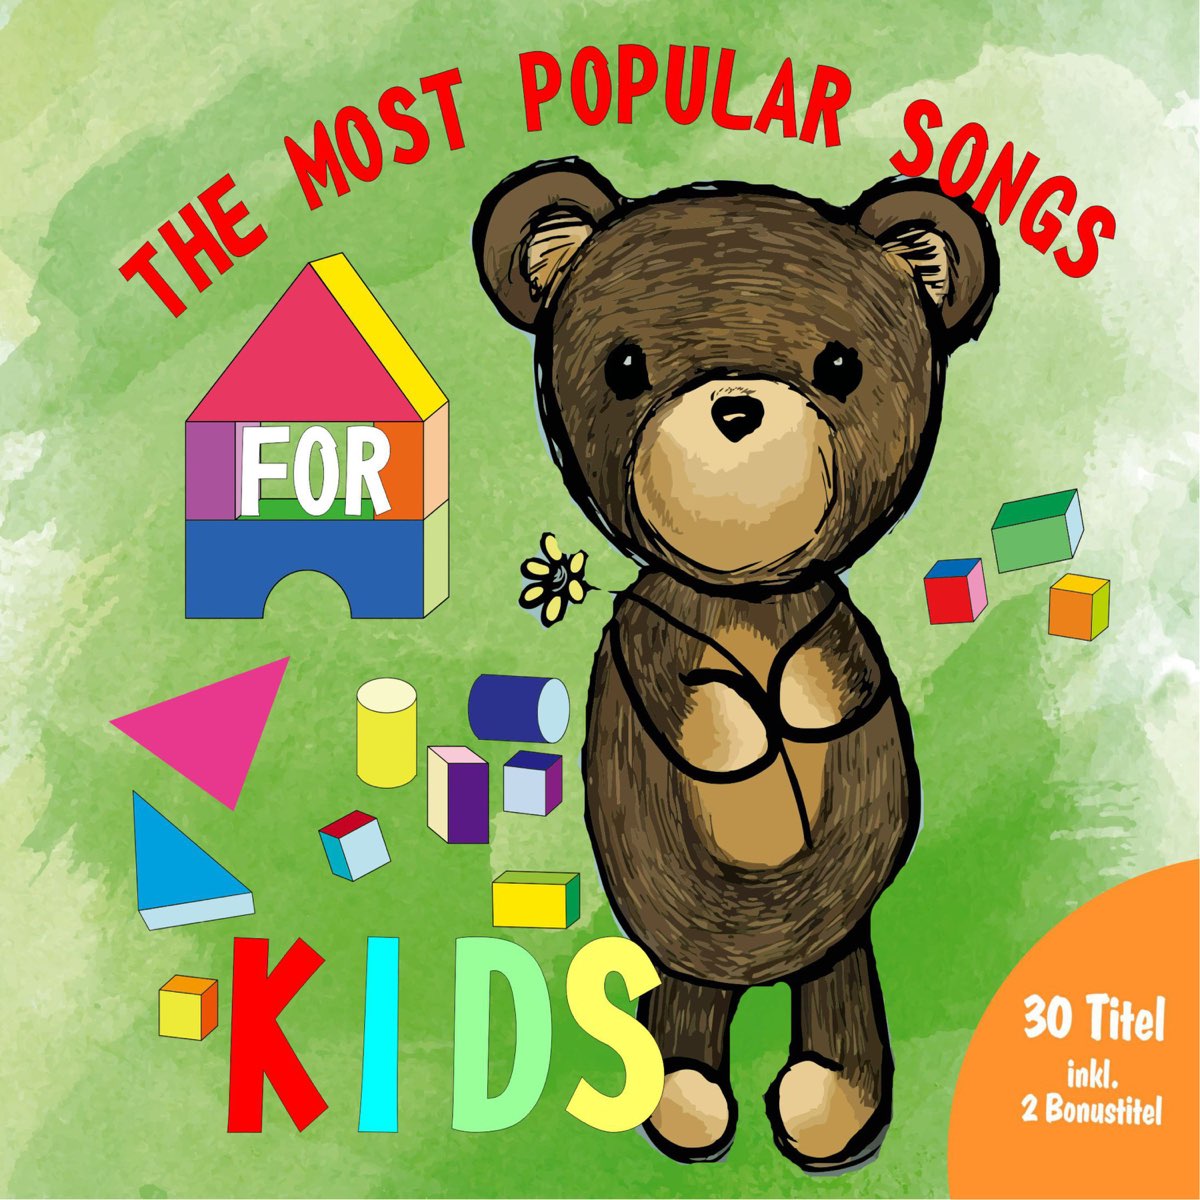 ‎The Most Popular Songs for Kids de Peter Huber en Apple Music